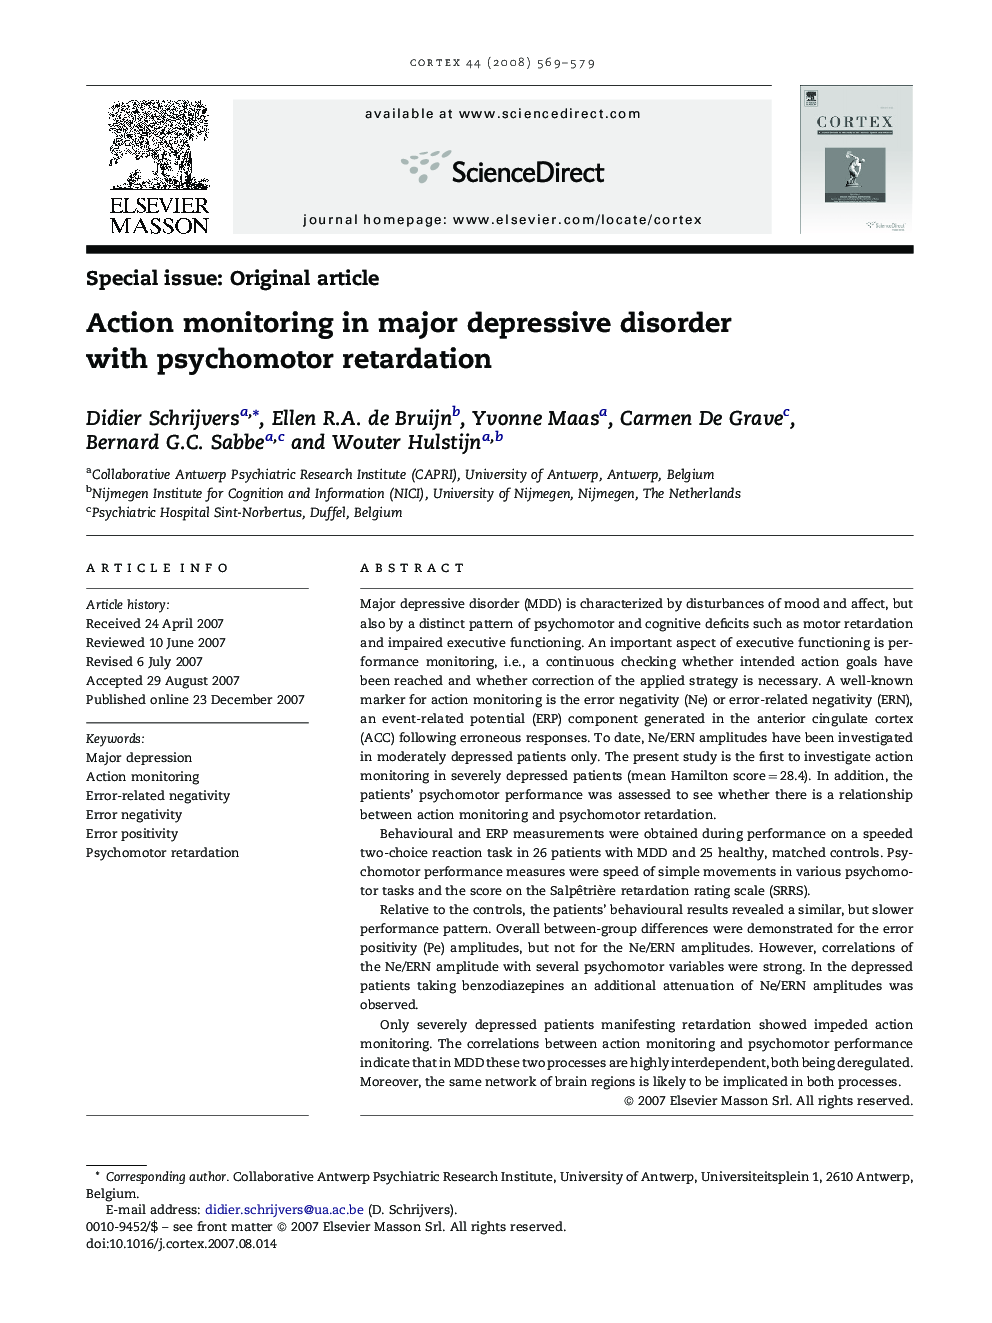 Action monitoring in major depressive disorder with psychomotor retardation